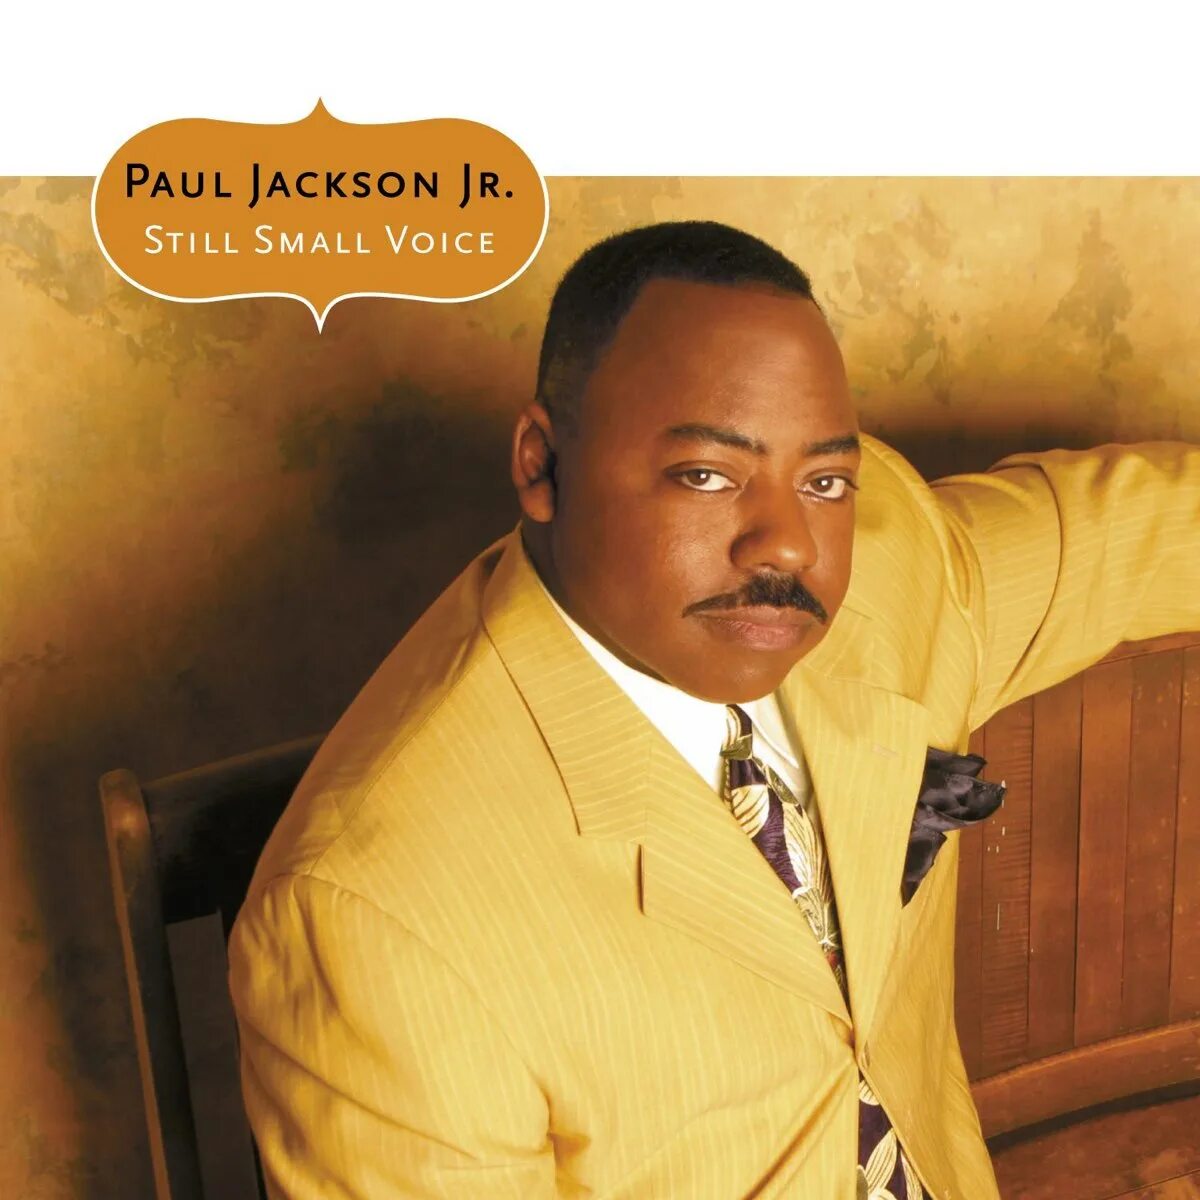 Small voice. Paul Jackson Jr. Still small Voice. Paul Jackson Jr. - Out of the Shadows (1990). Still small Voice группа.